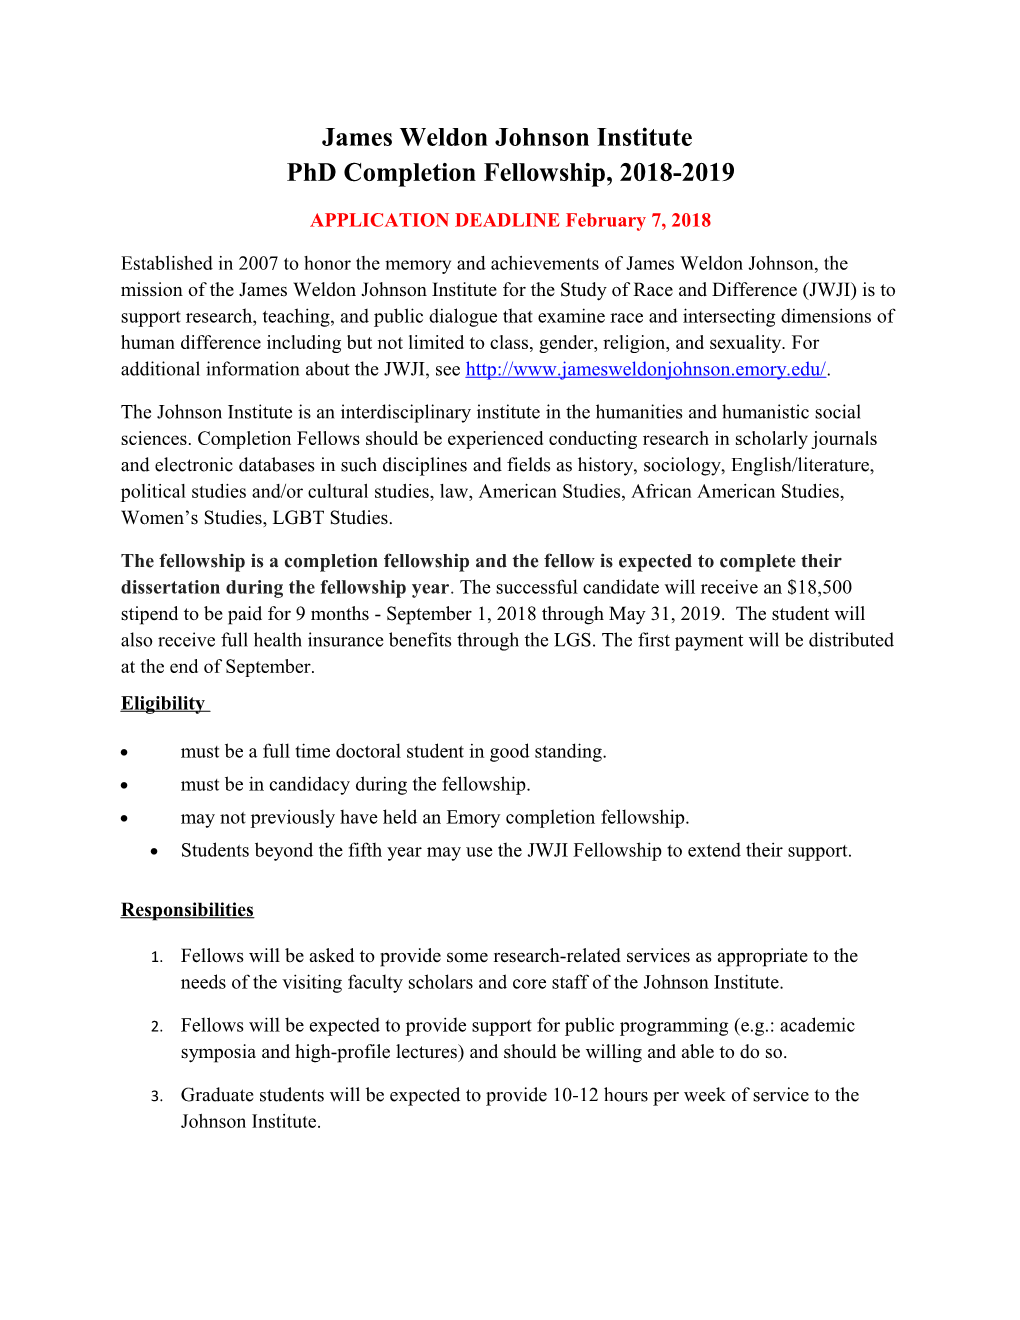 James Weldon Johnson Institute Phd Completion Fellowship, 2018-2019